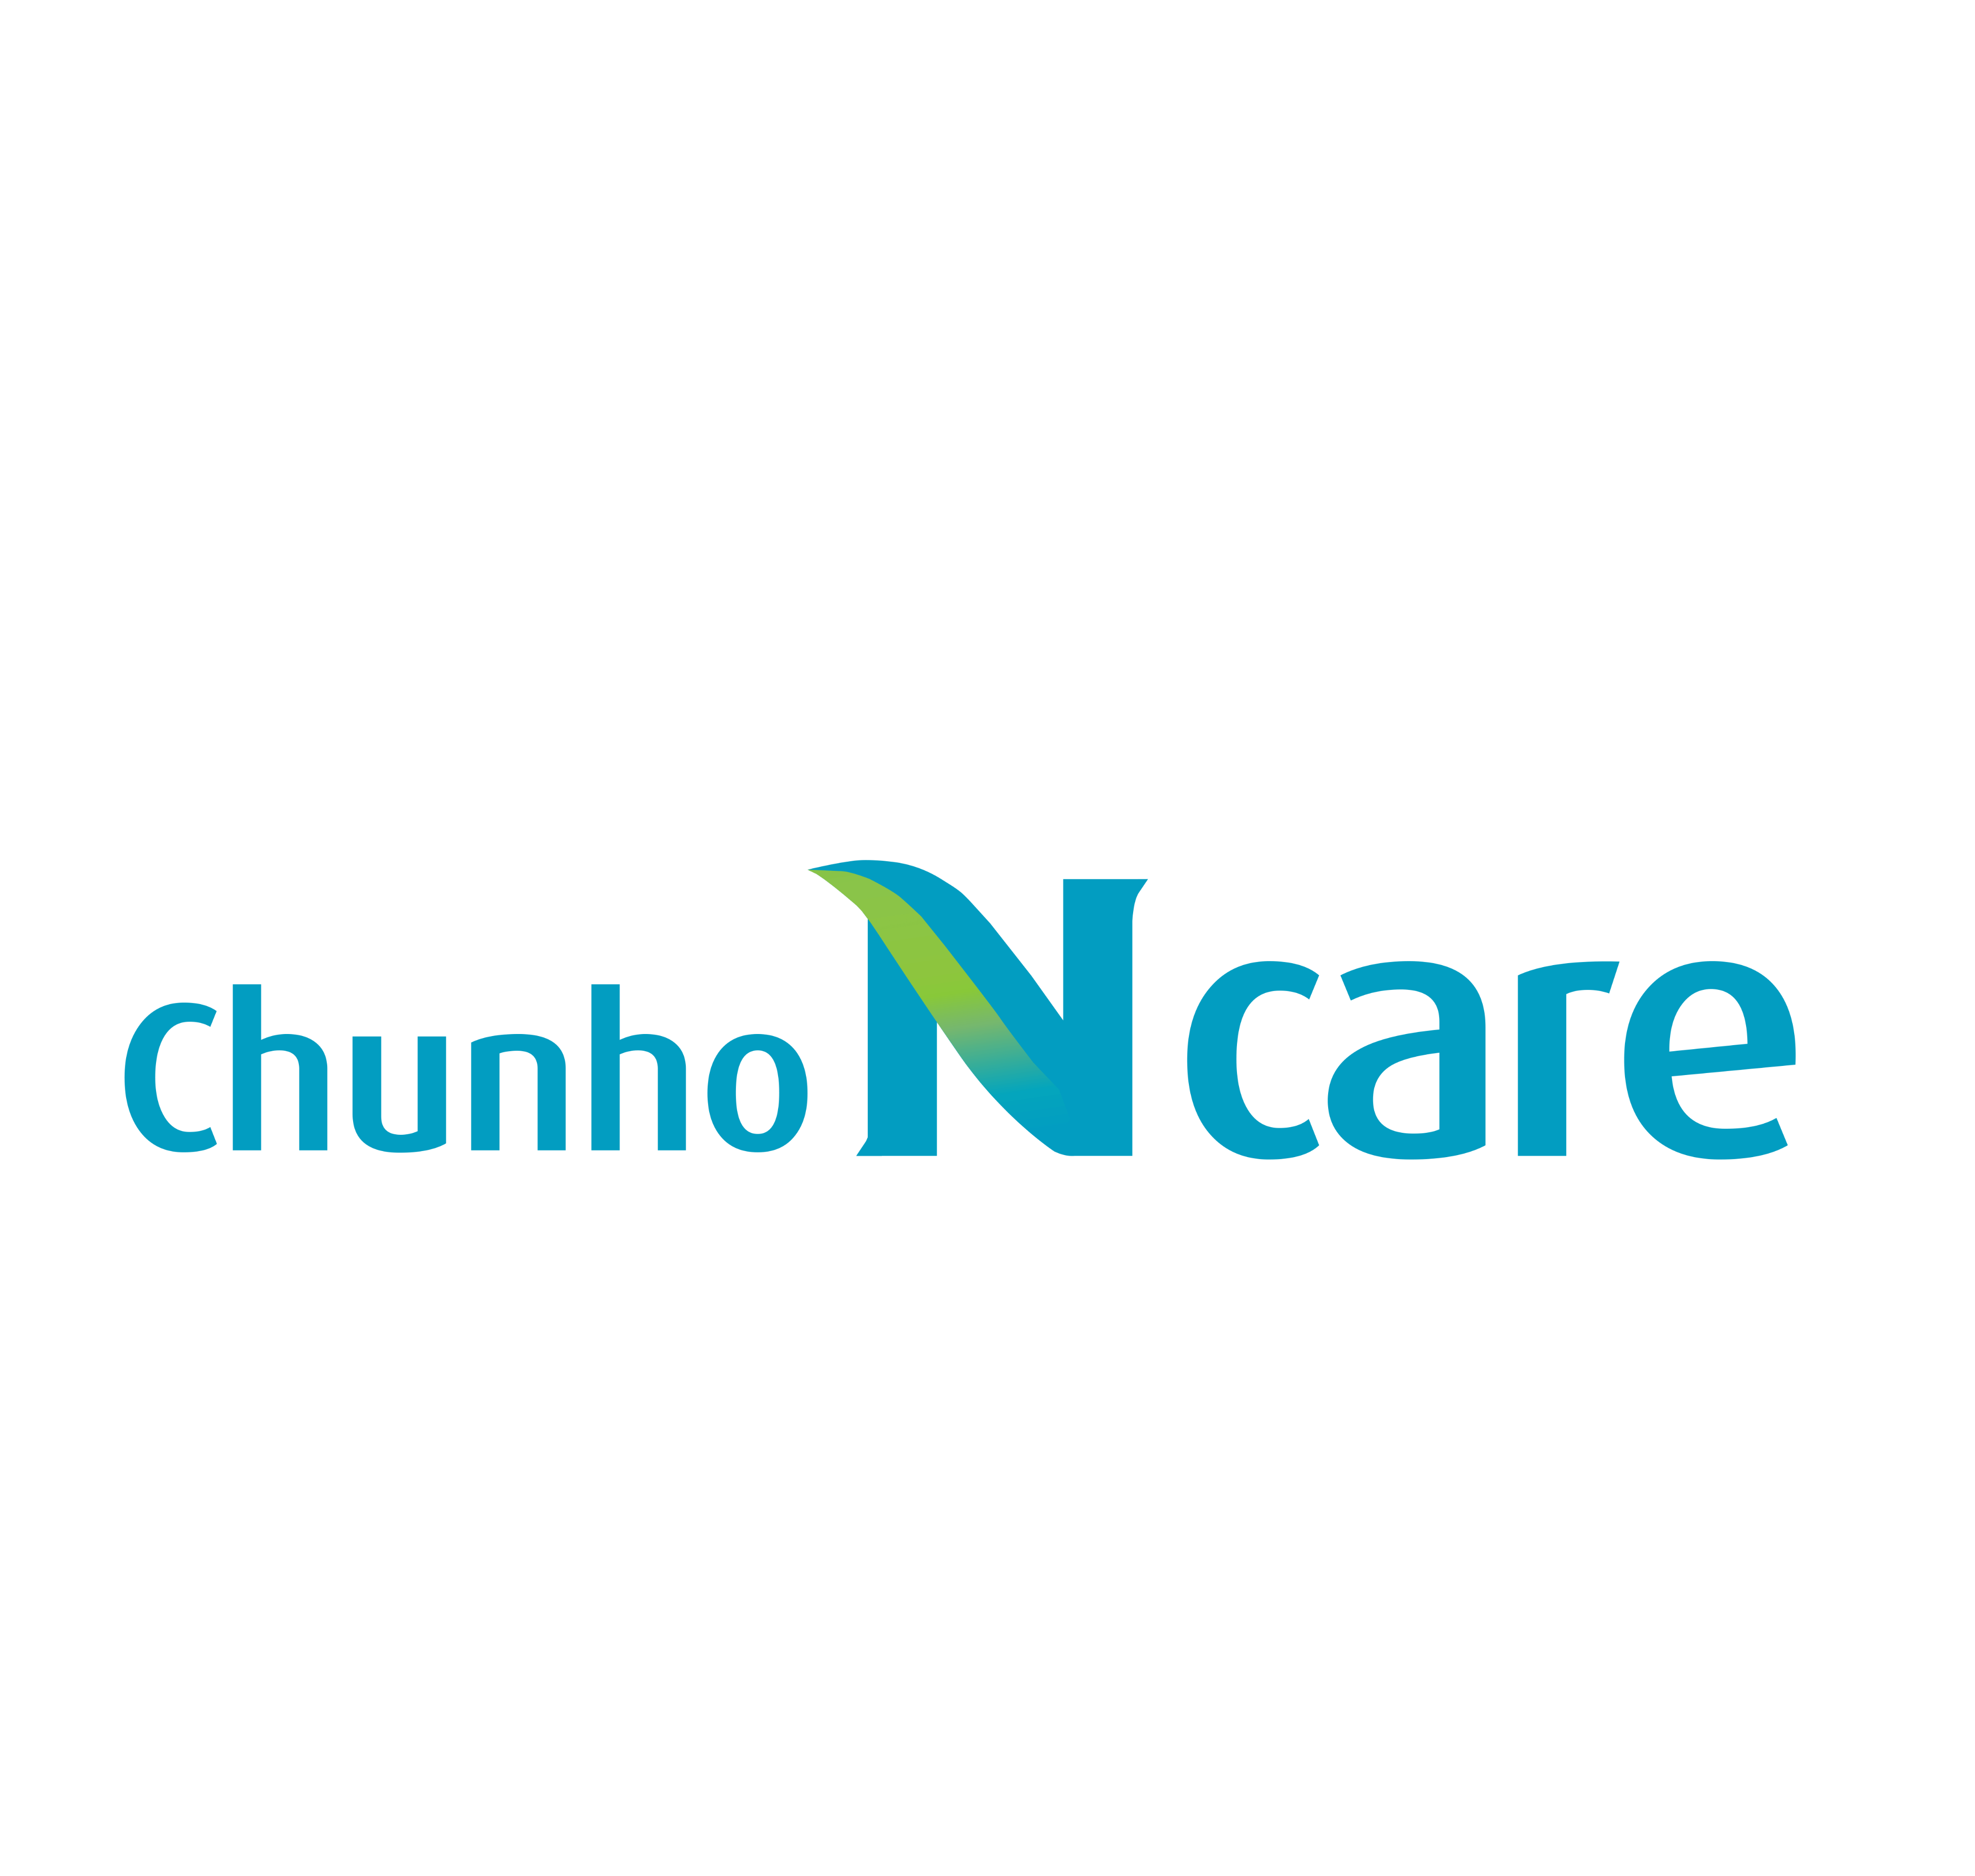 ChunhoNcare